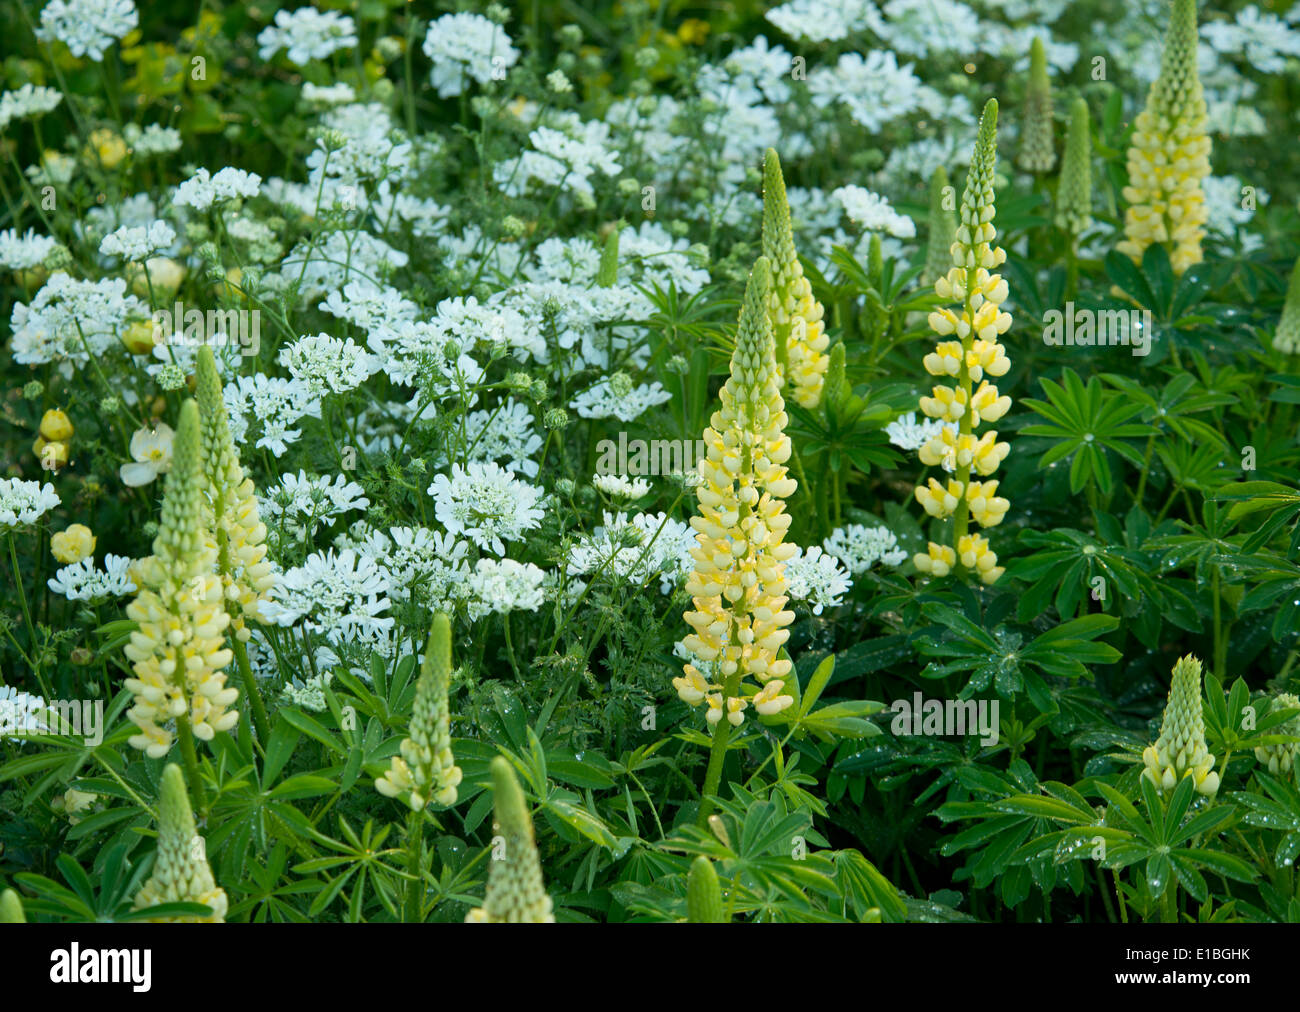 Un close-up di piante nel giardino Laurent-Perrier al Chelsea Flower Show 2014. Foto Stock